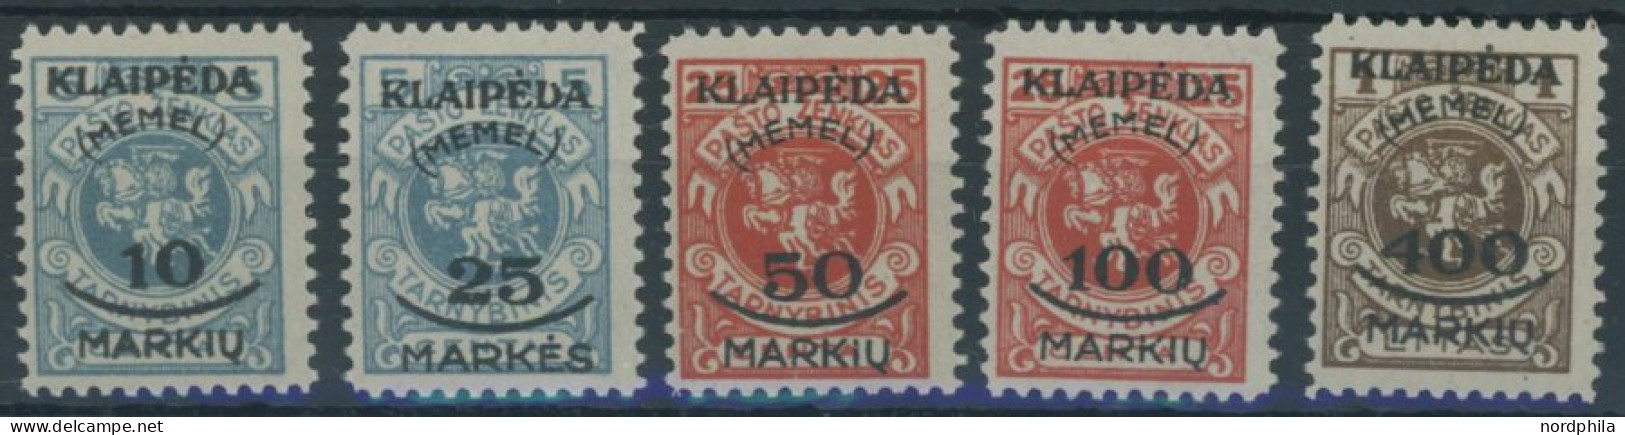 MEMELGEBIET 124-28 , 1923, Staatsdruckerei Kowno, Postfrisch, Prachtsatz, Mi. 120.- - Memelgebiet 1923